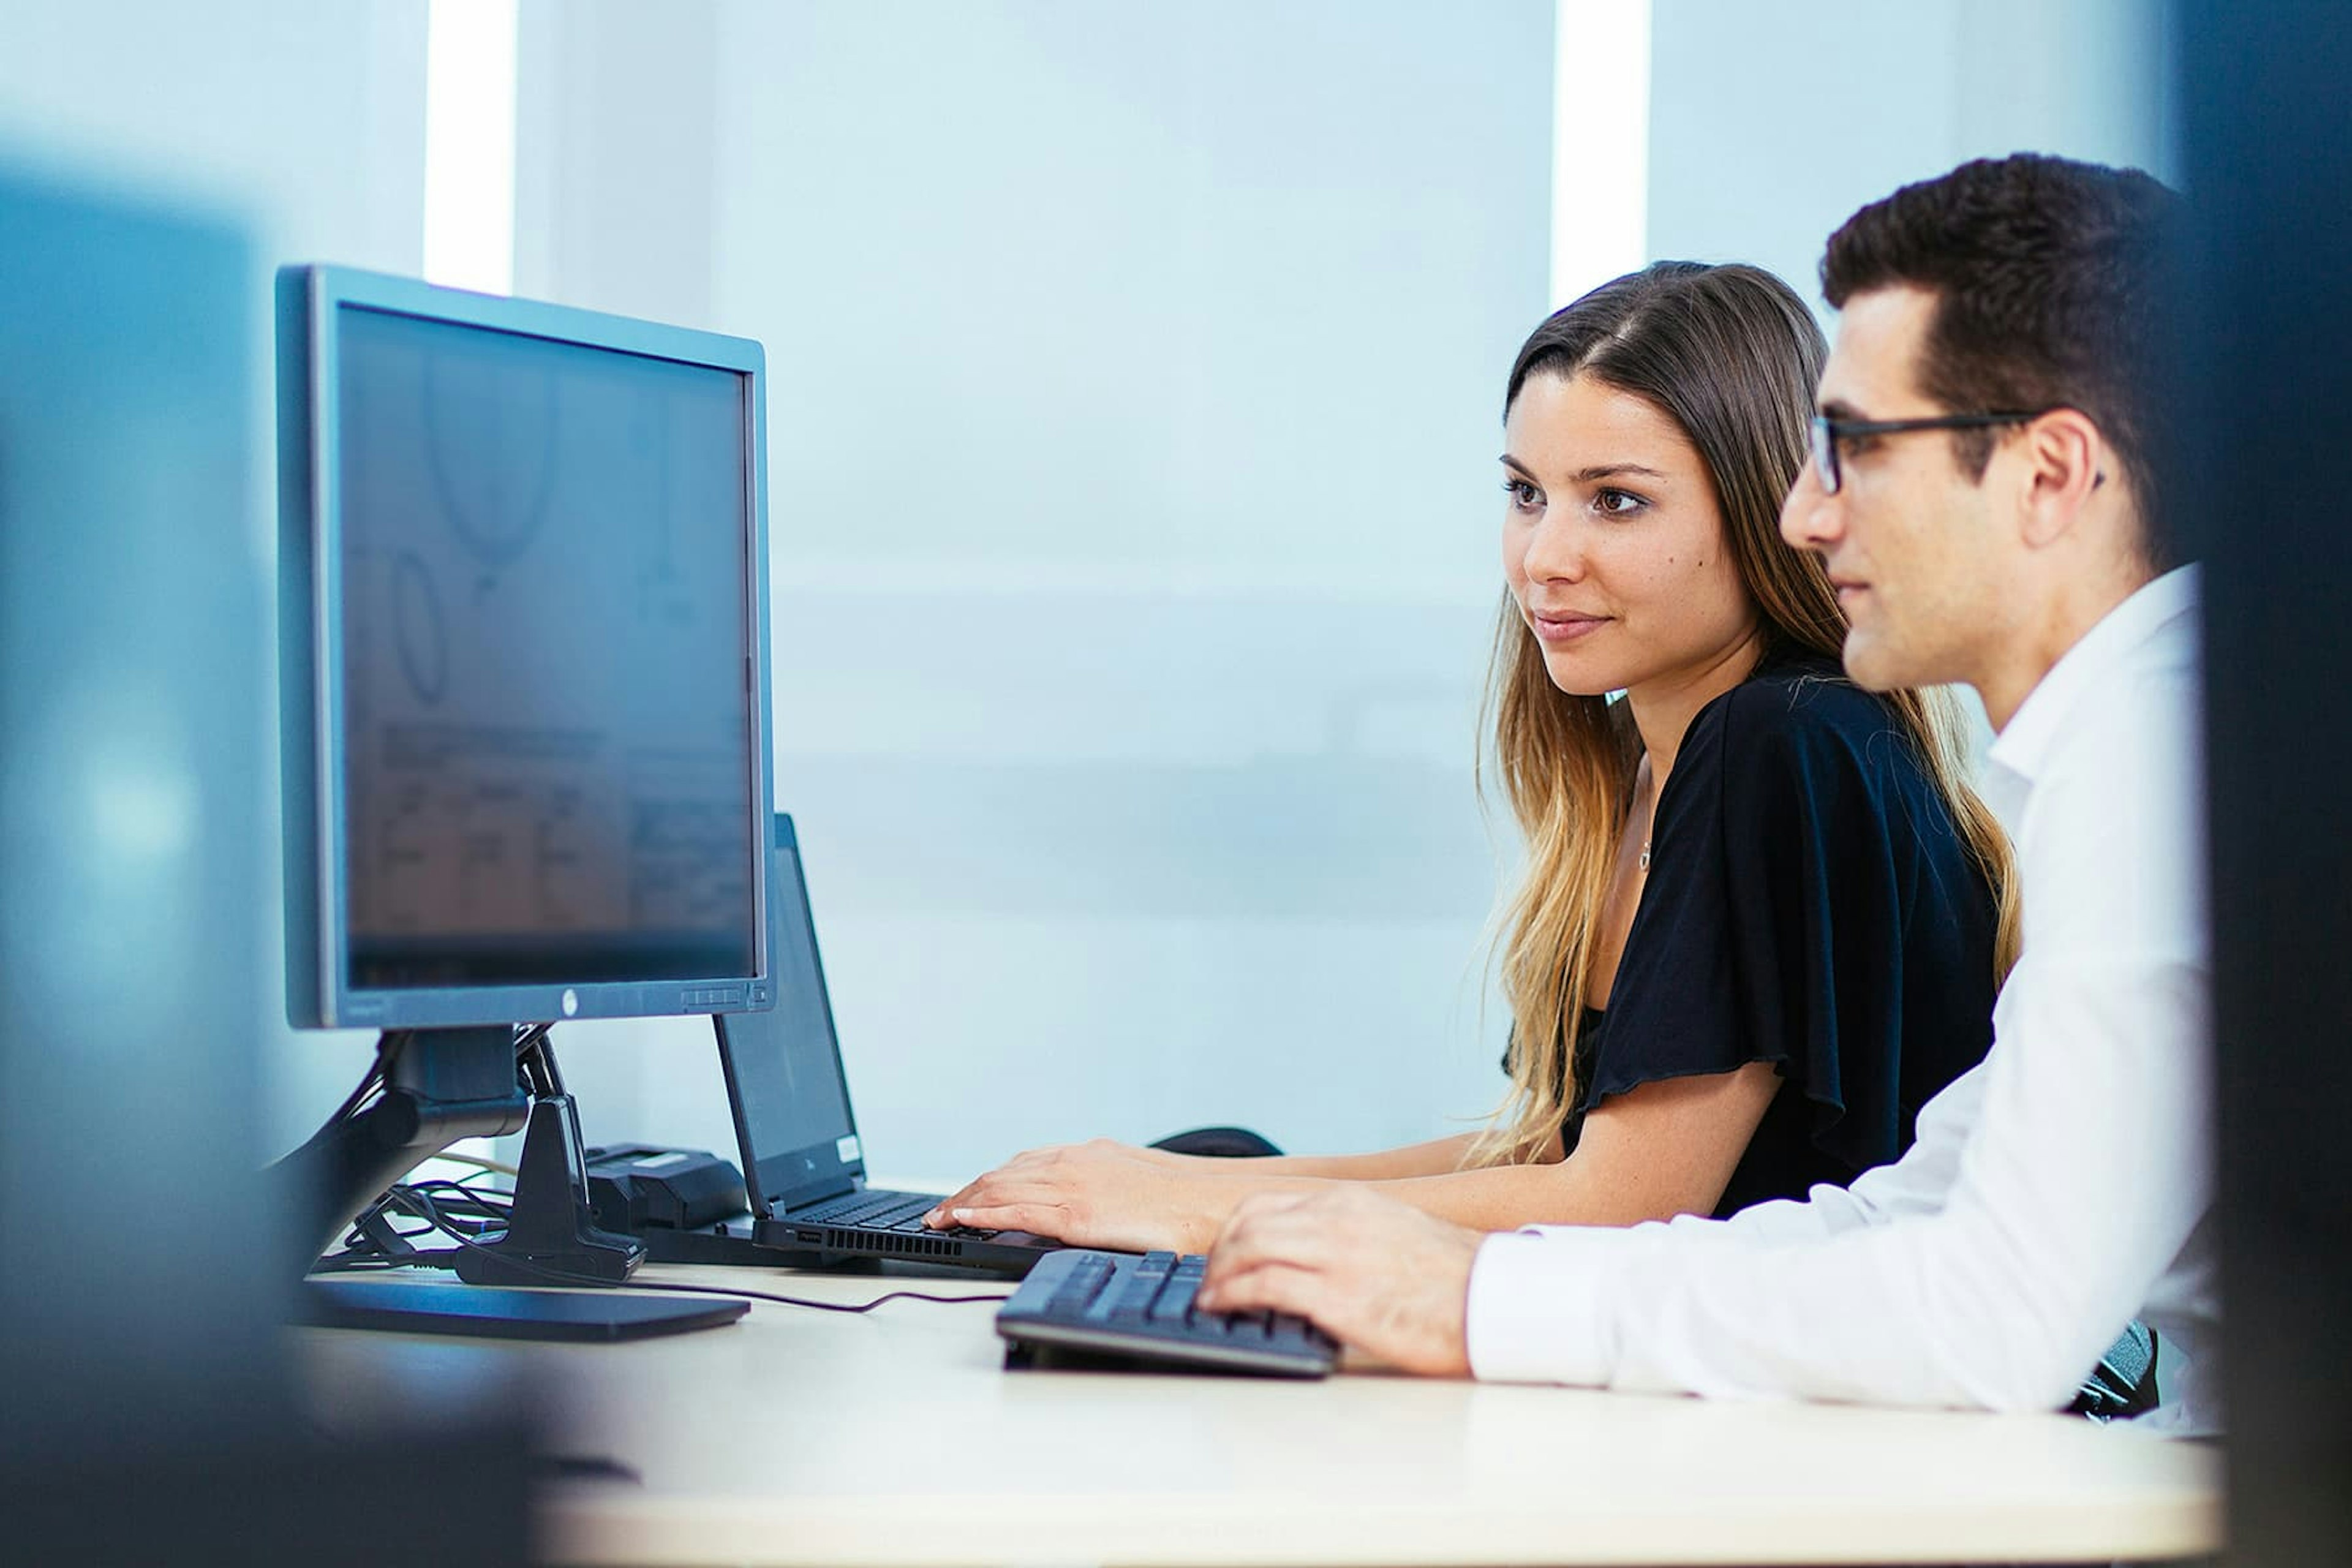 Man and woman at a desk looking at a computer screen